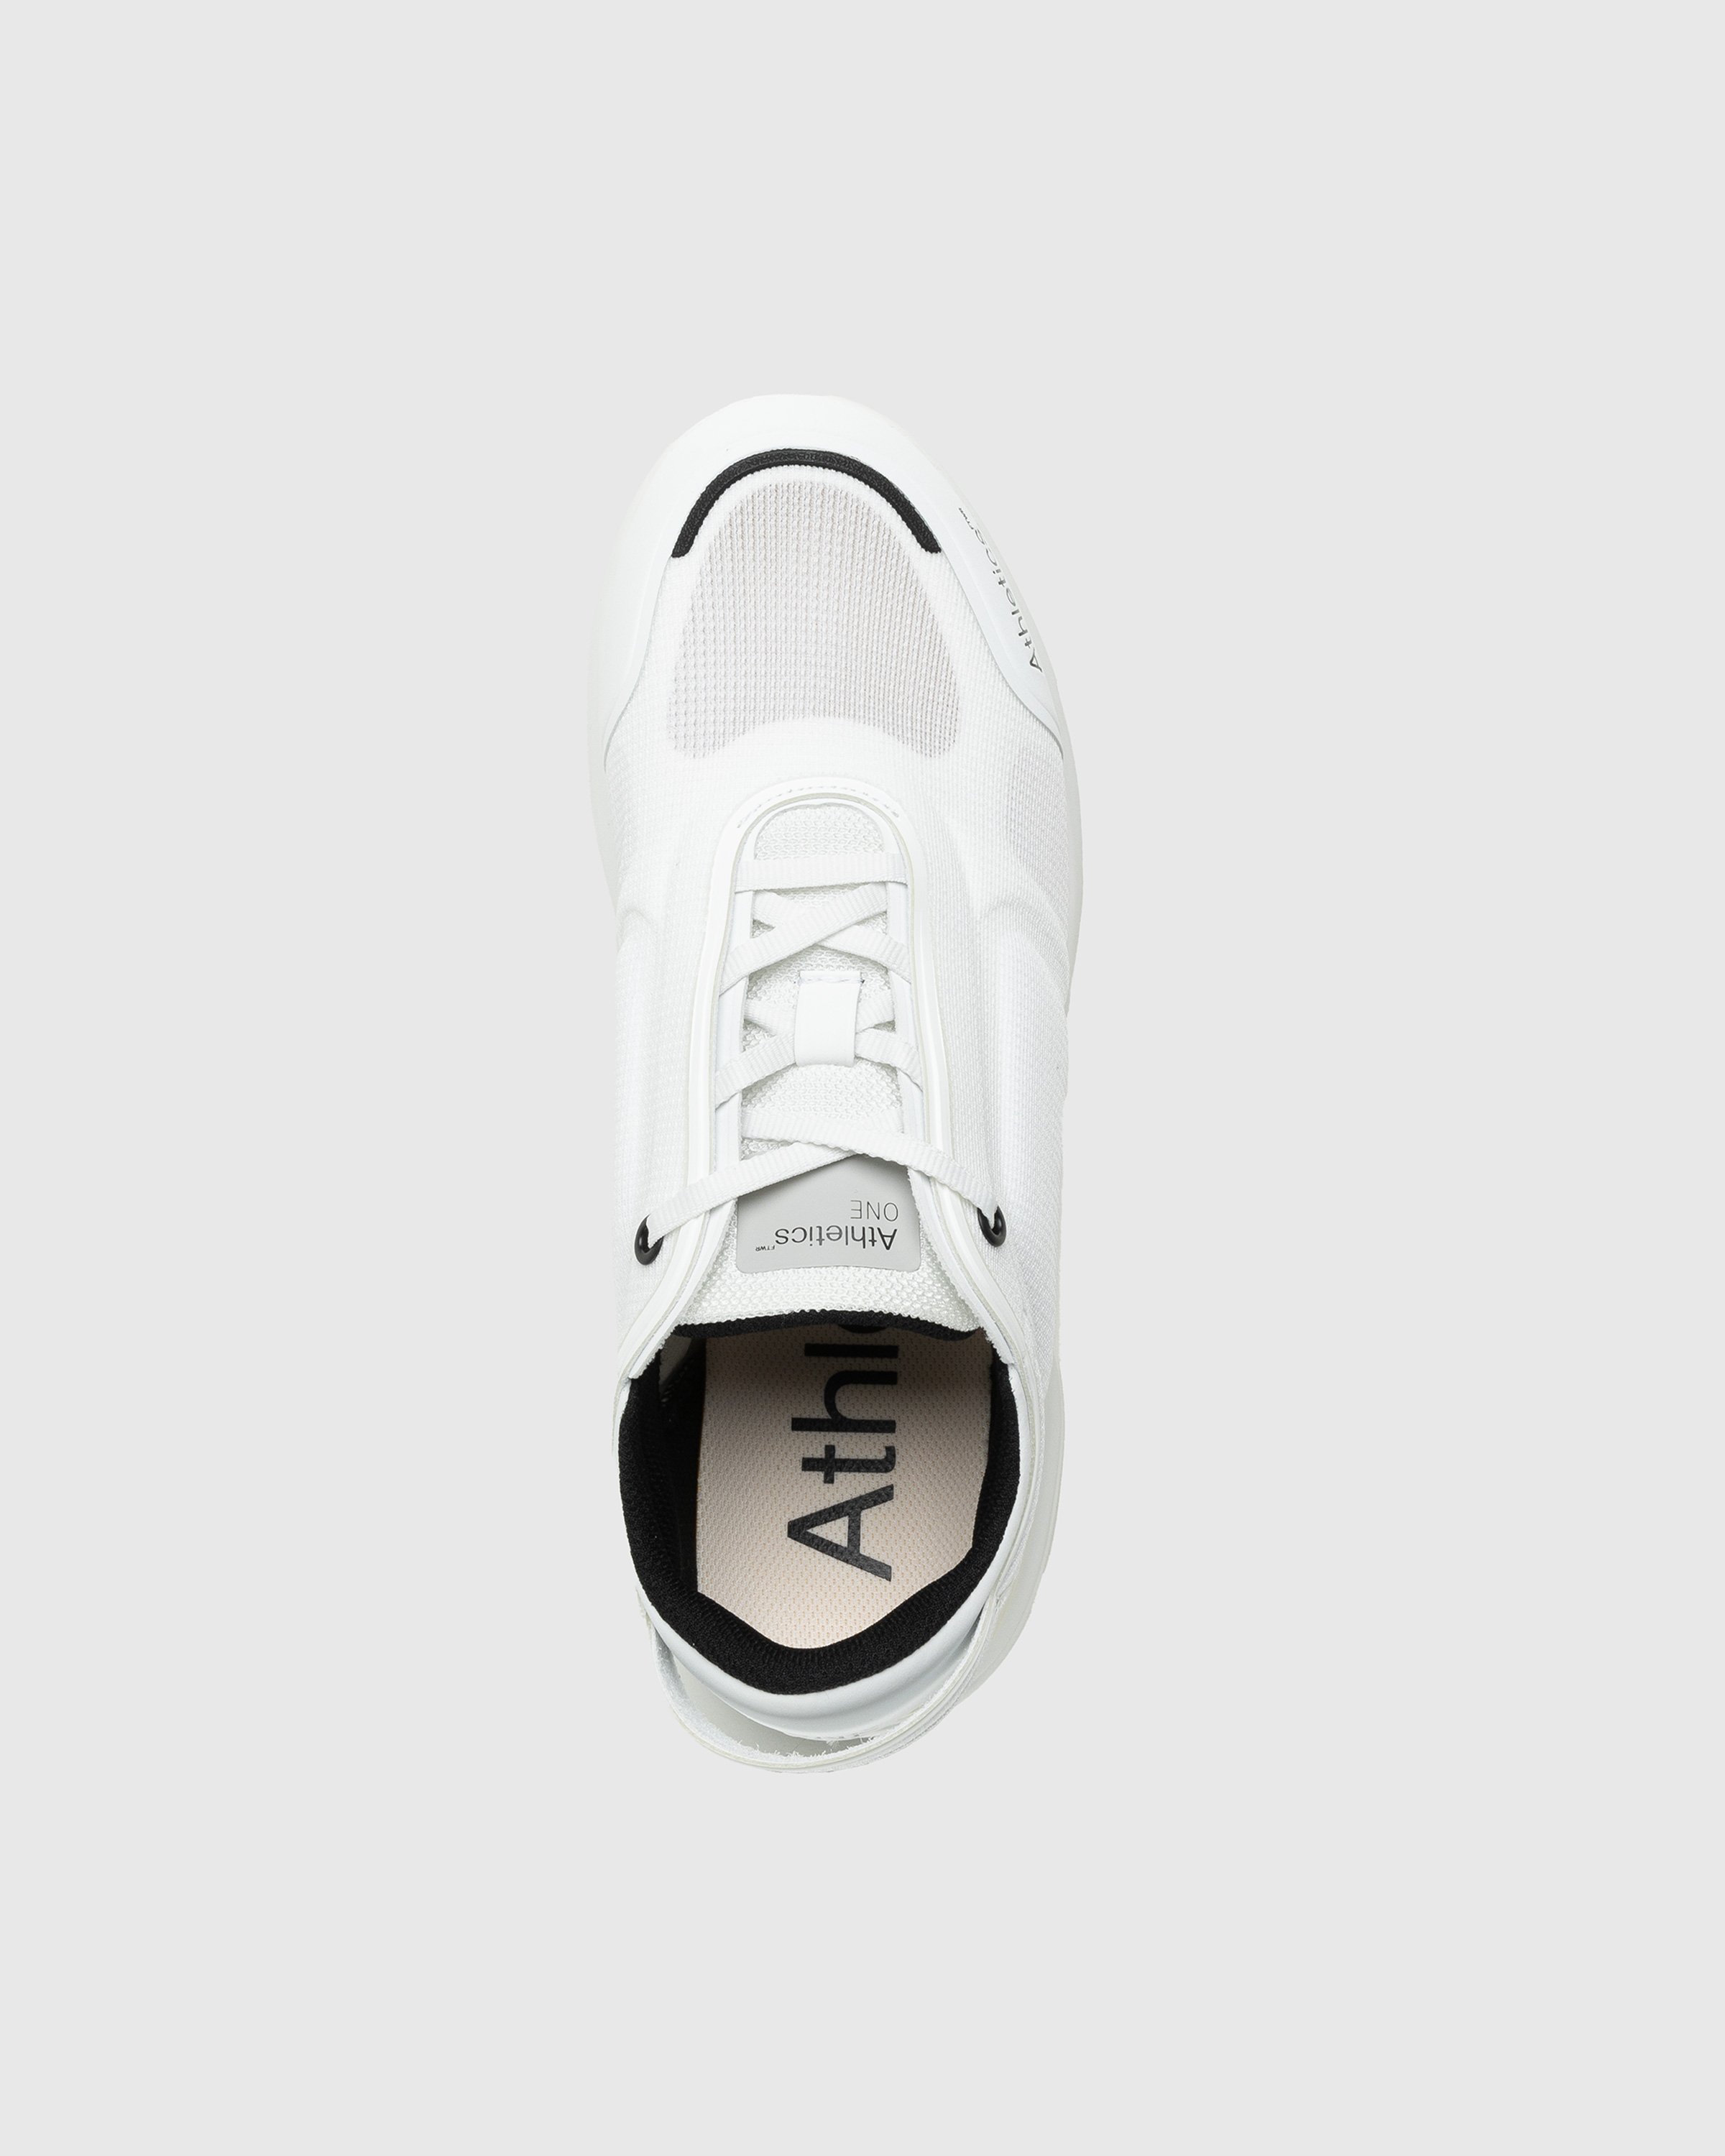 Athletics Footwear - One White - Footwear - White - Image 5